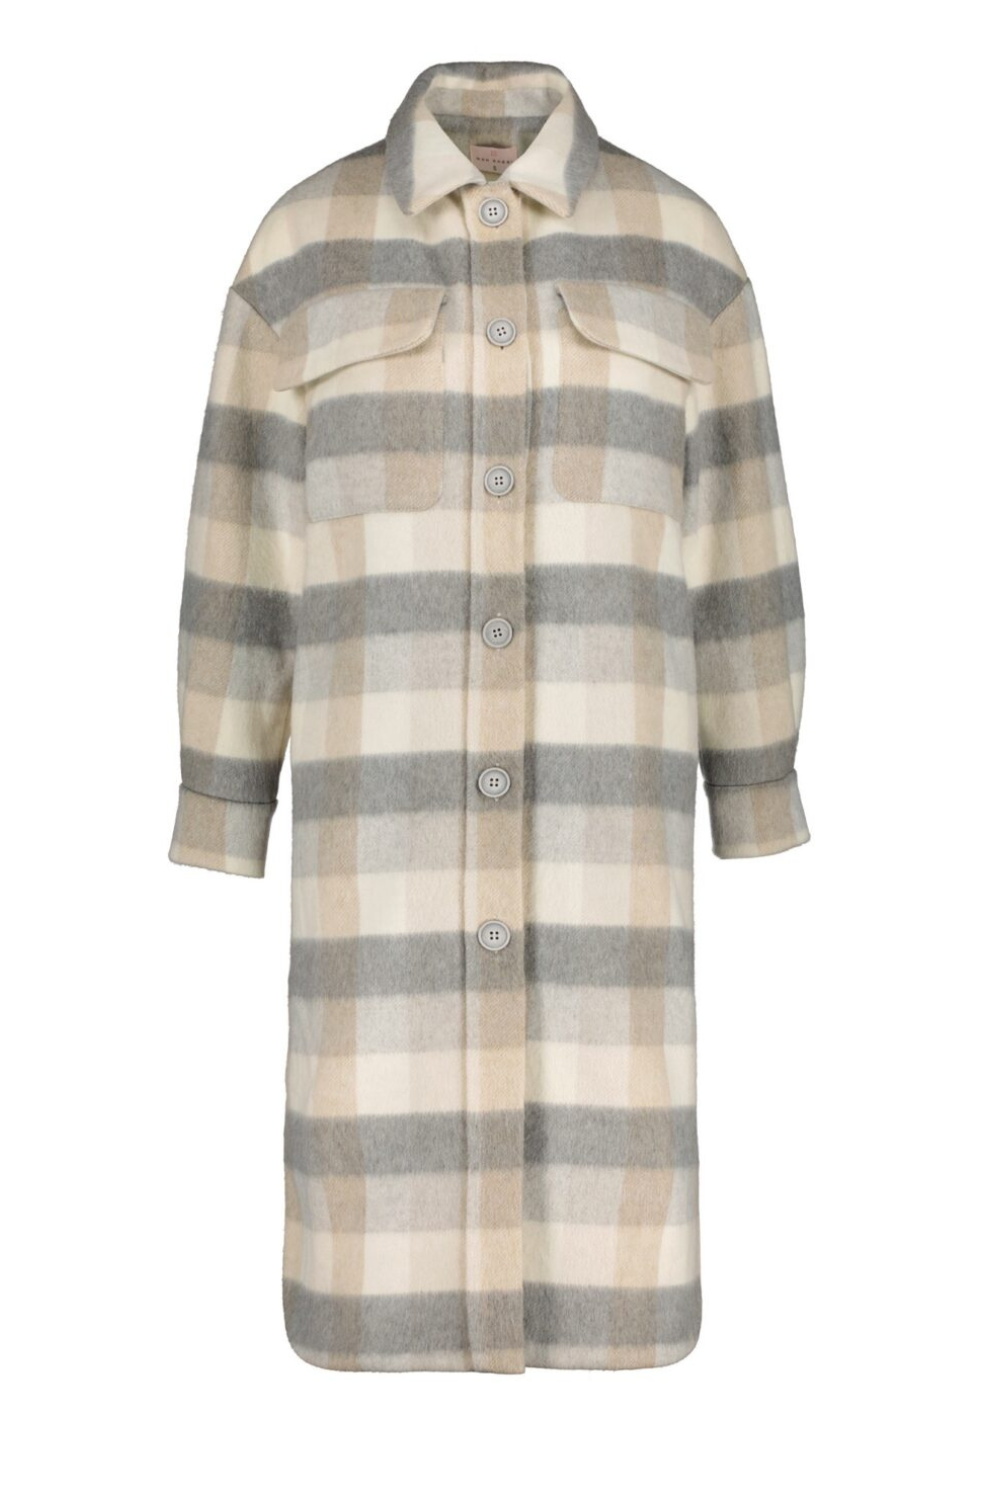 Shirt-coat in gray-beige checkered color (Mon Cheri)